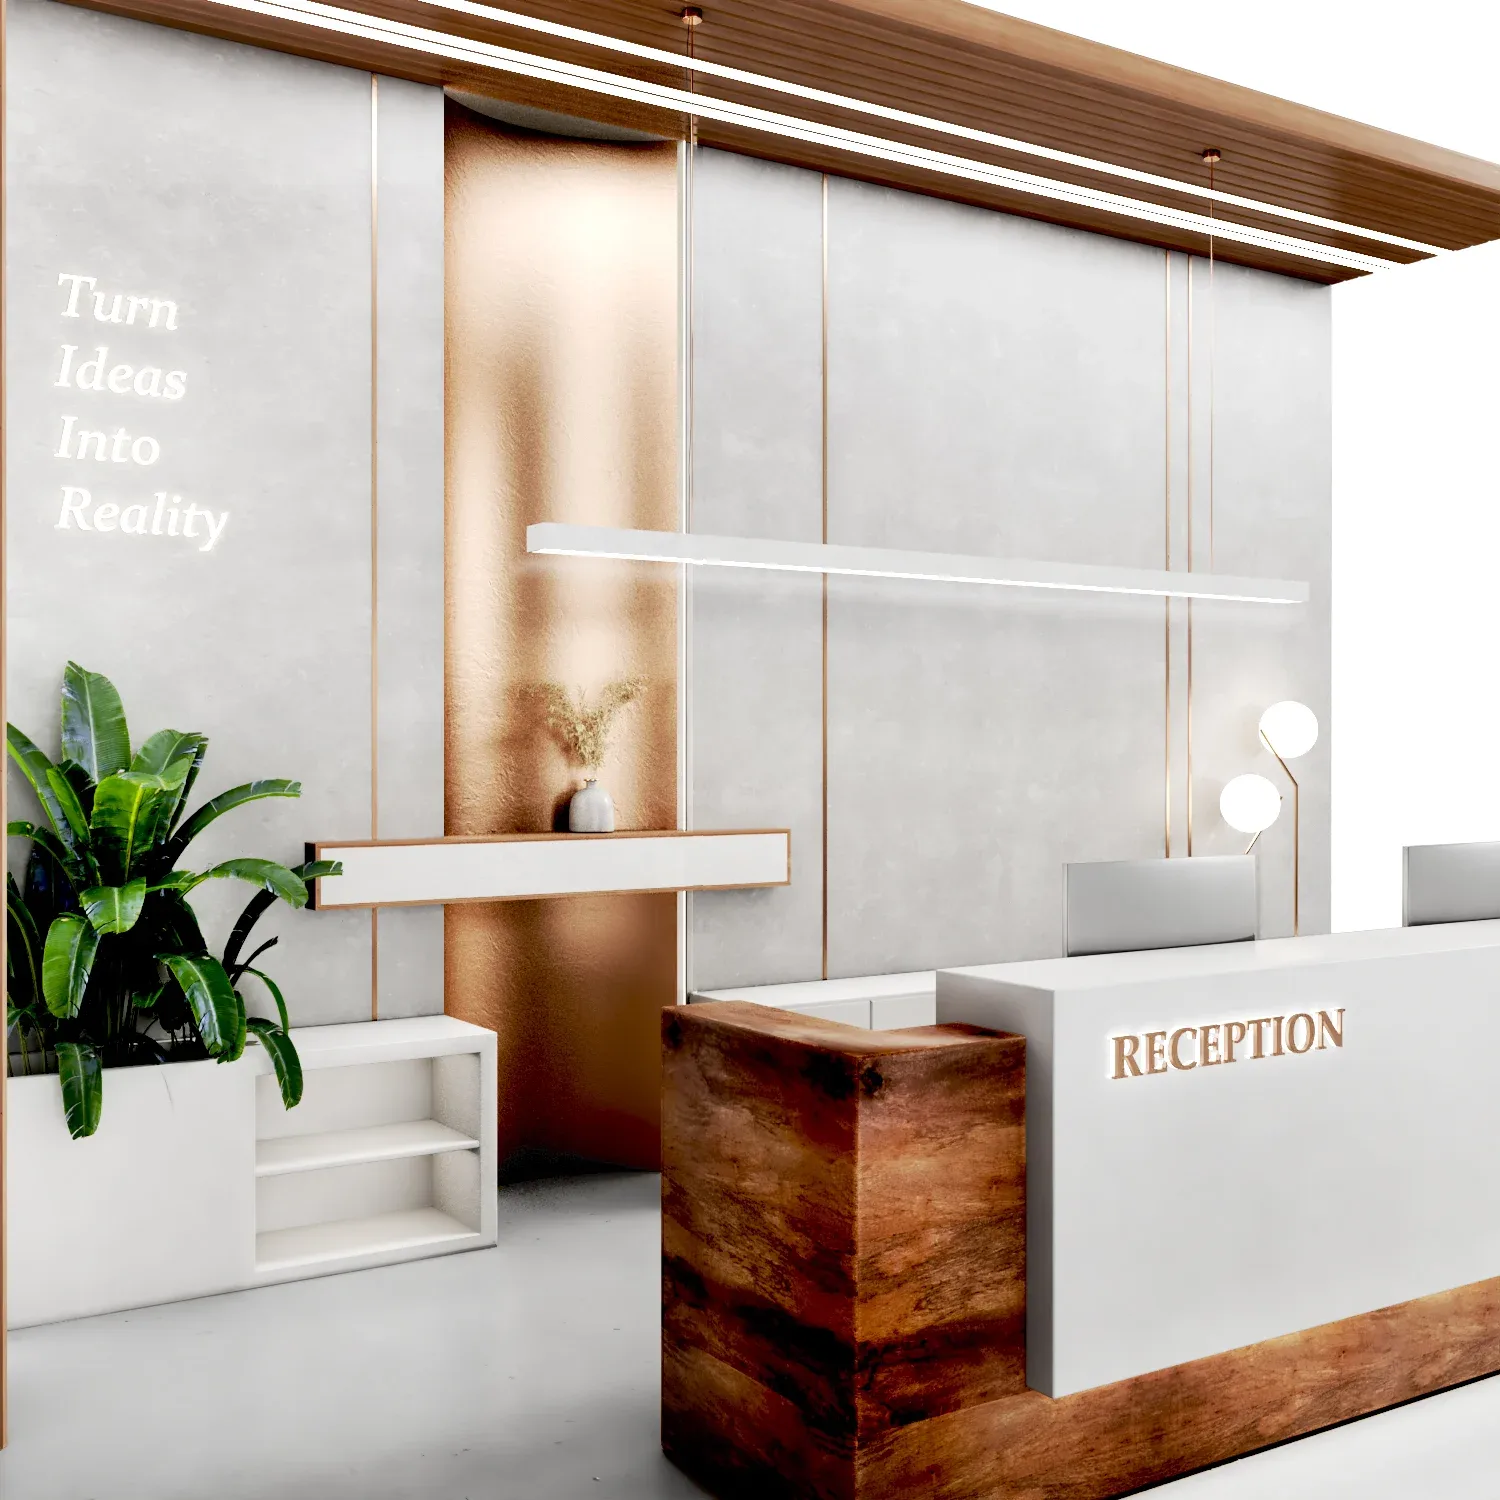 Reception10 lobby, counter, entrance